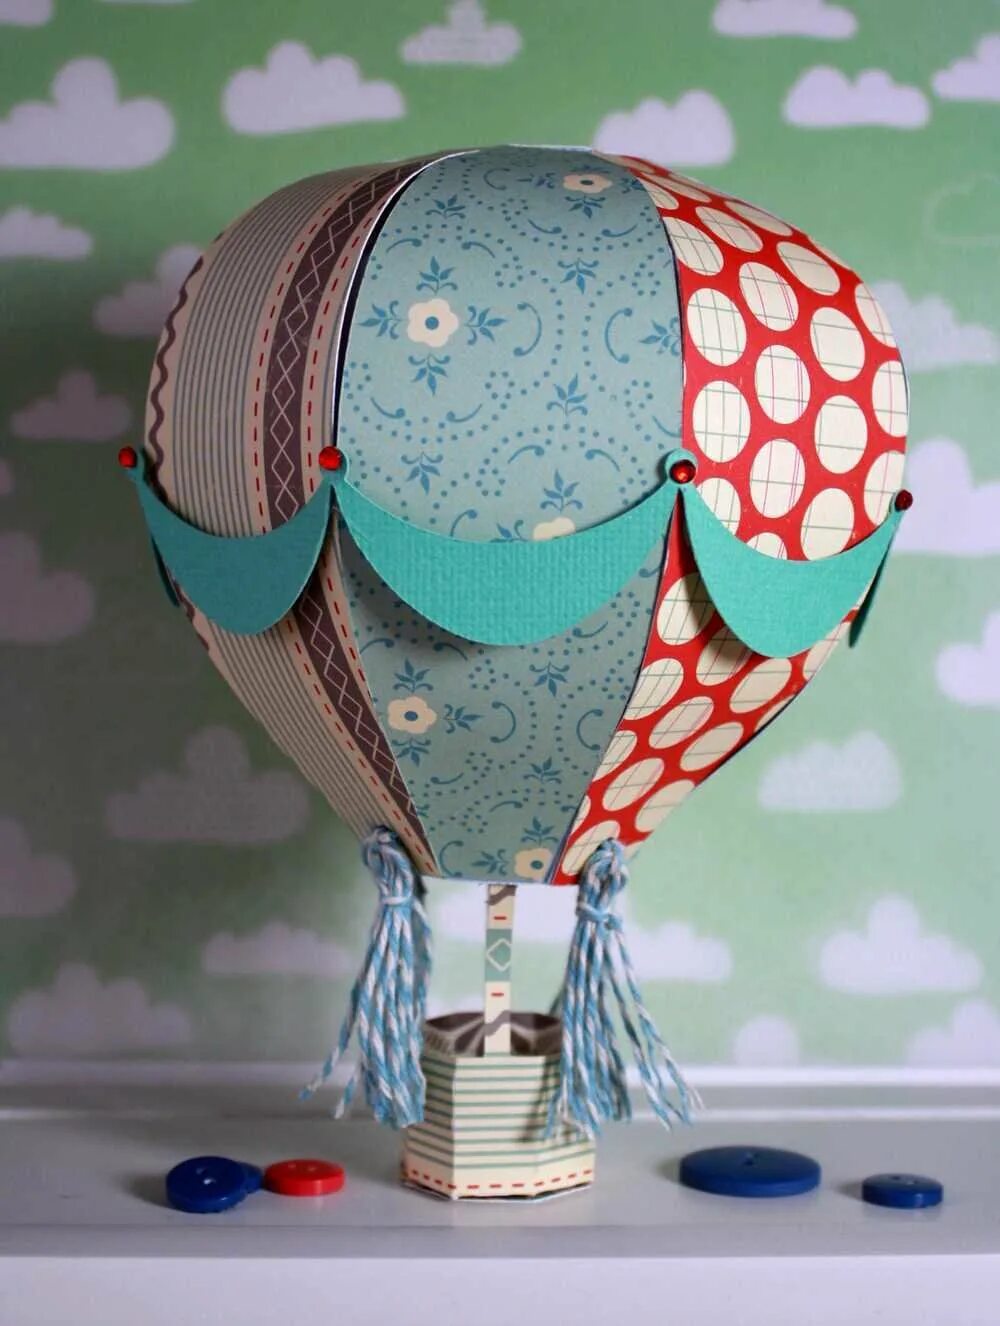 Мастер класс воздушный шар. Воздушный шар из бумаги. Воздушный шар поделка. Воздушный шар с корзиной из бумаги. Объемный воздушный шар.